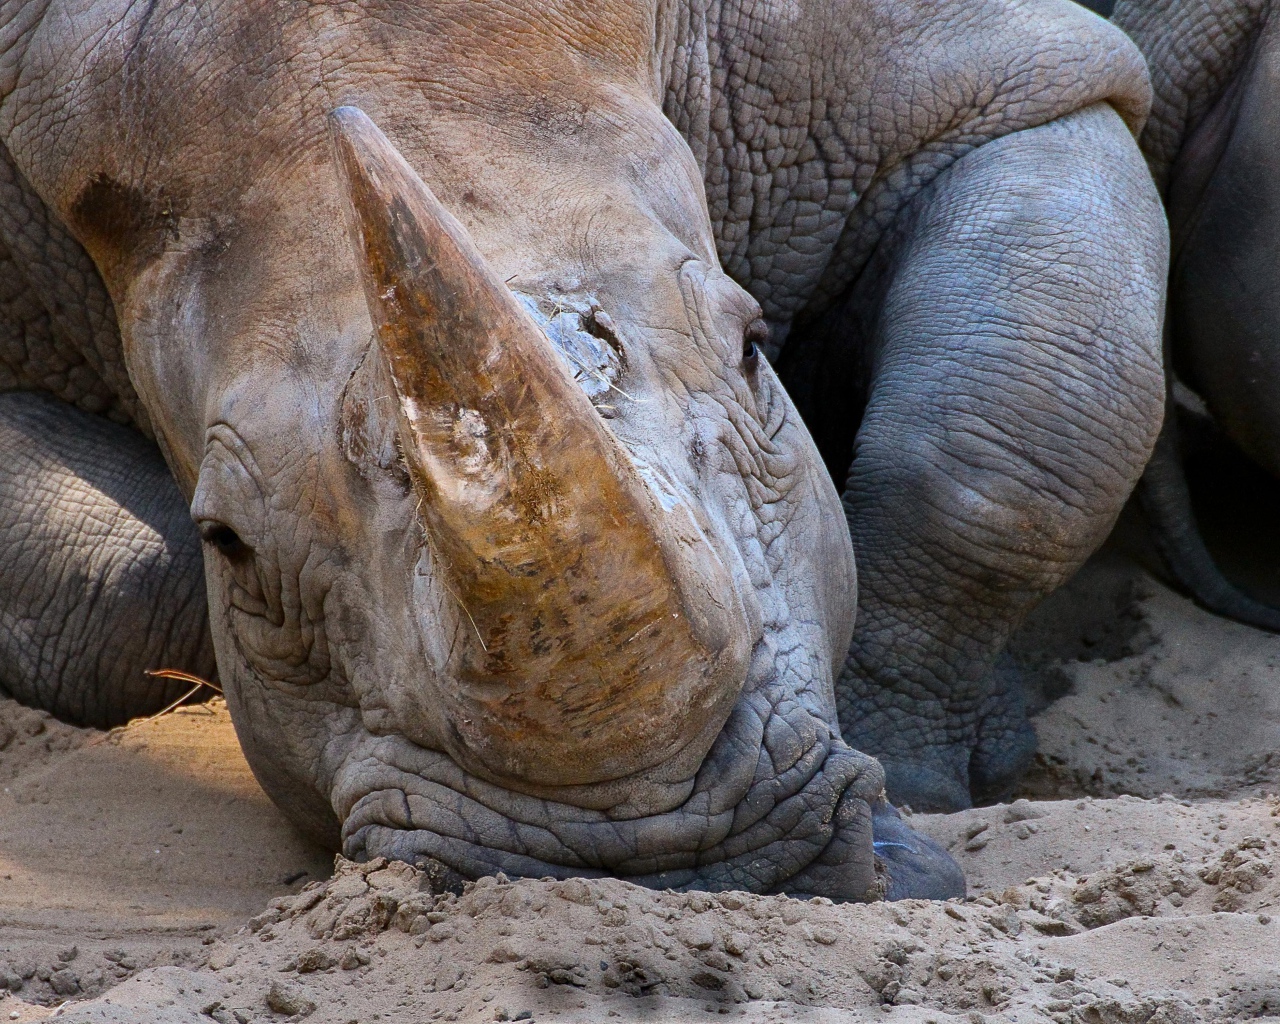 Big rhino lying on the sand